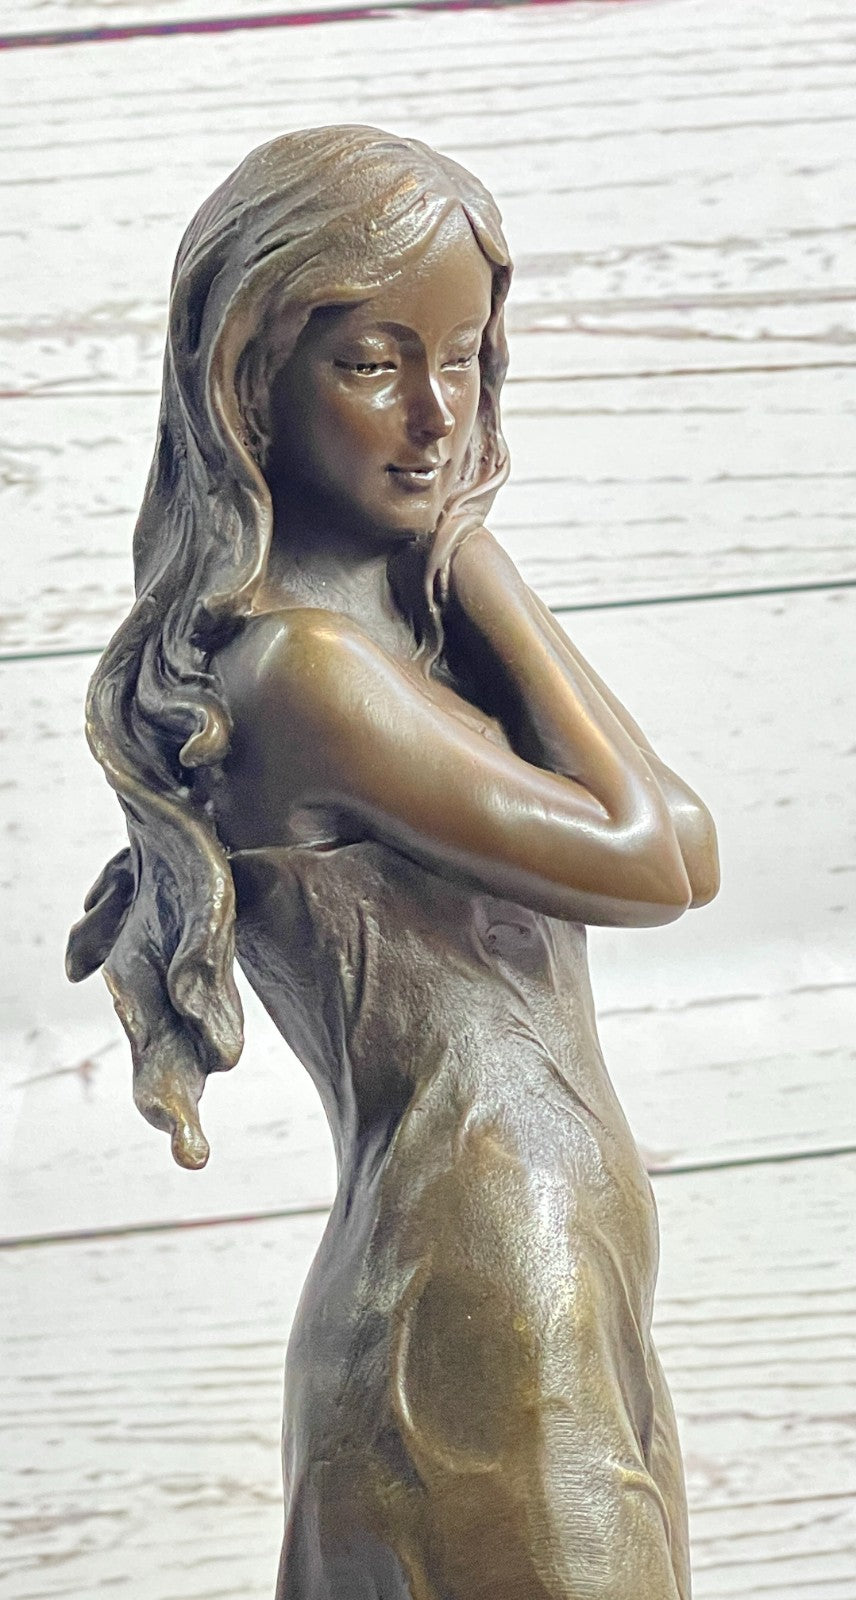 Sensual Female Bronze Sculpture in Art Deco Style | Handcrafted Statue by Milo | Lost Wax Technique